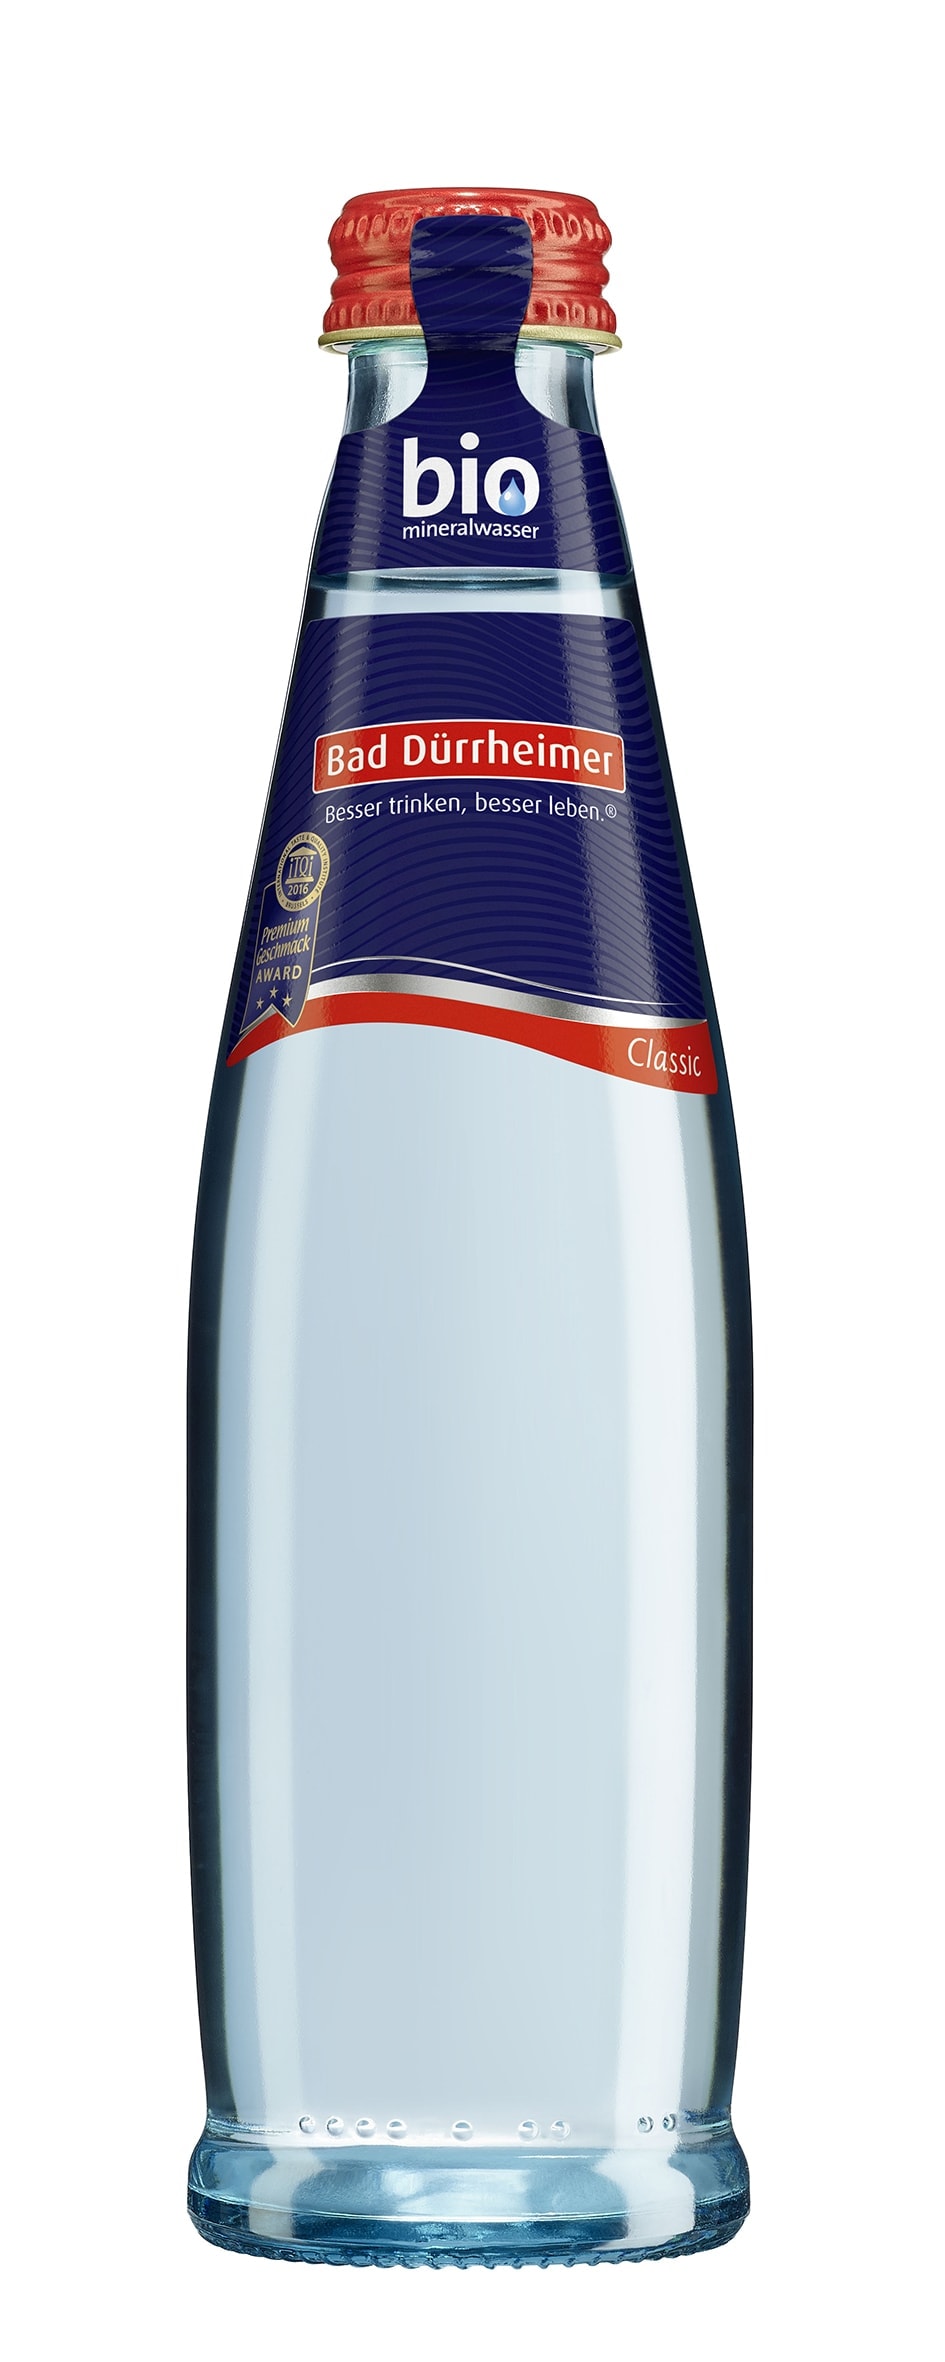 Bad Dürrheimer Exclusiv Classic